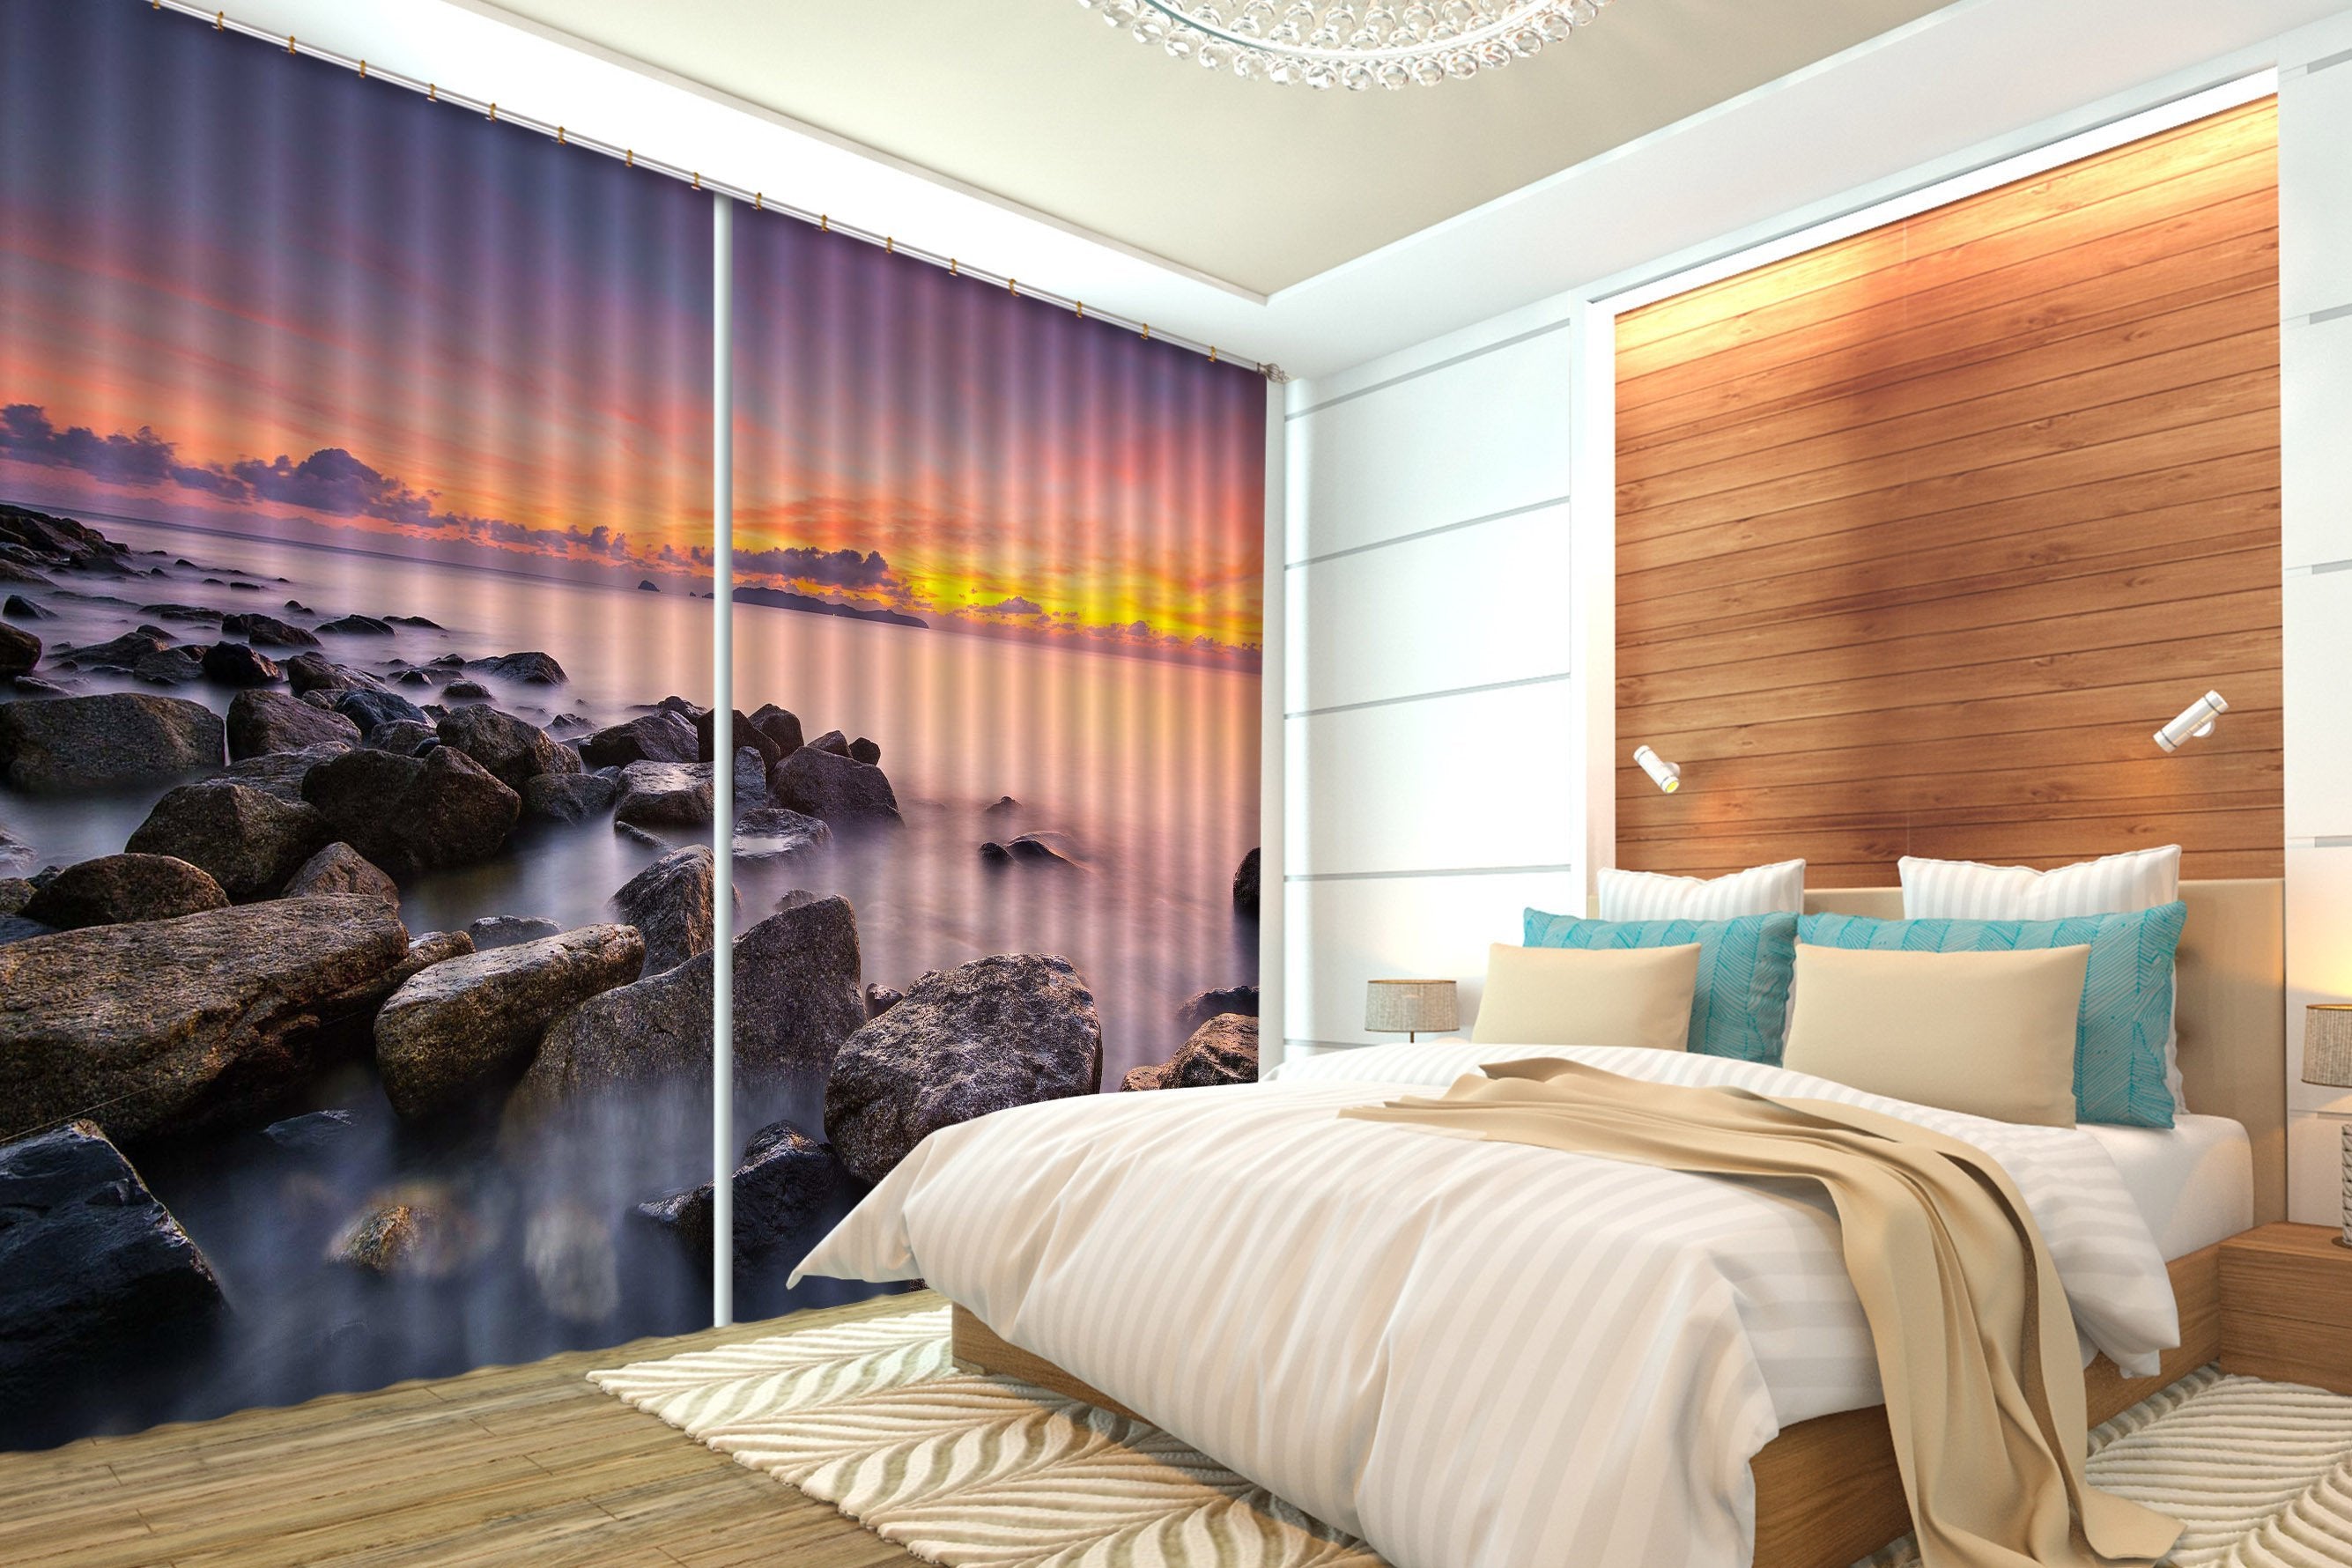 3D Stones Sea Sunset Glow 338 Curtains Drapes Wallpaper AJ Wallpaper 